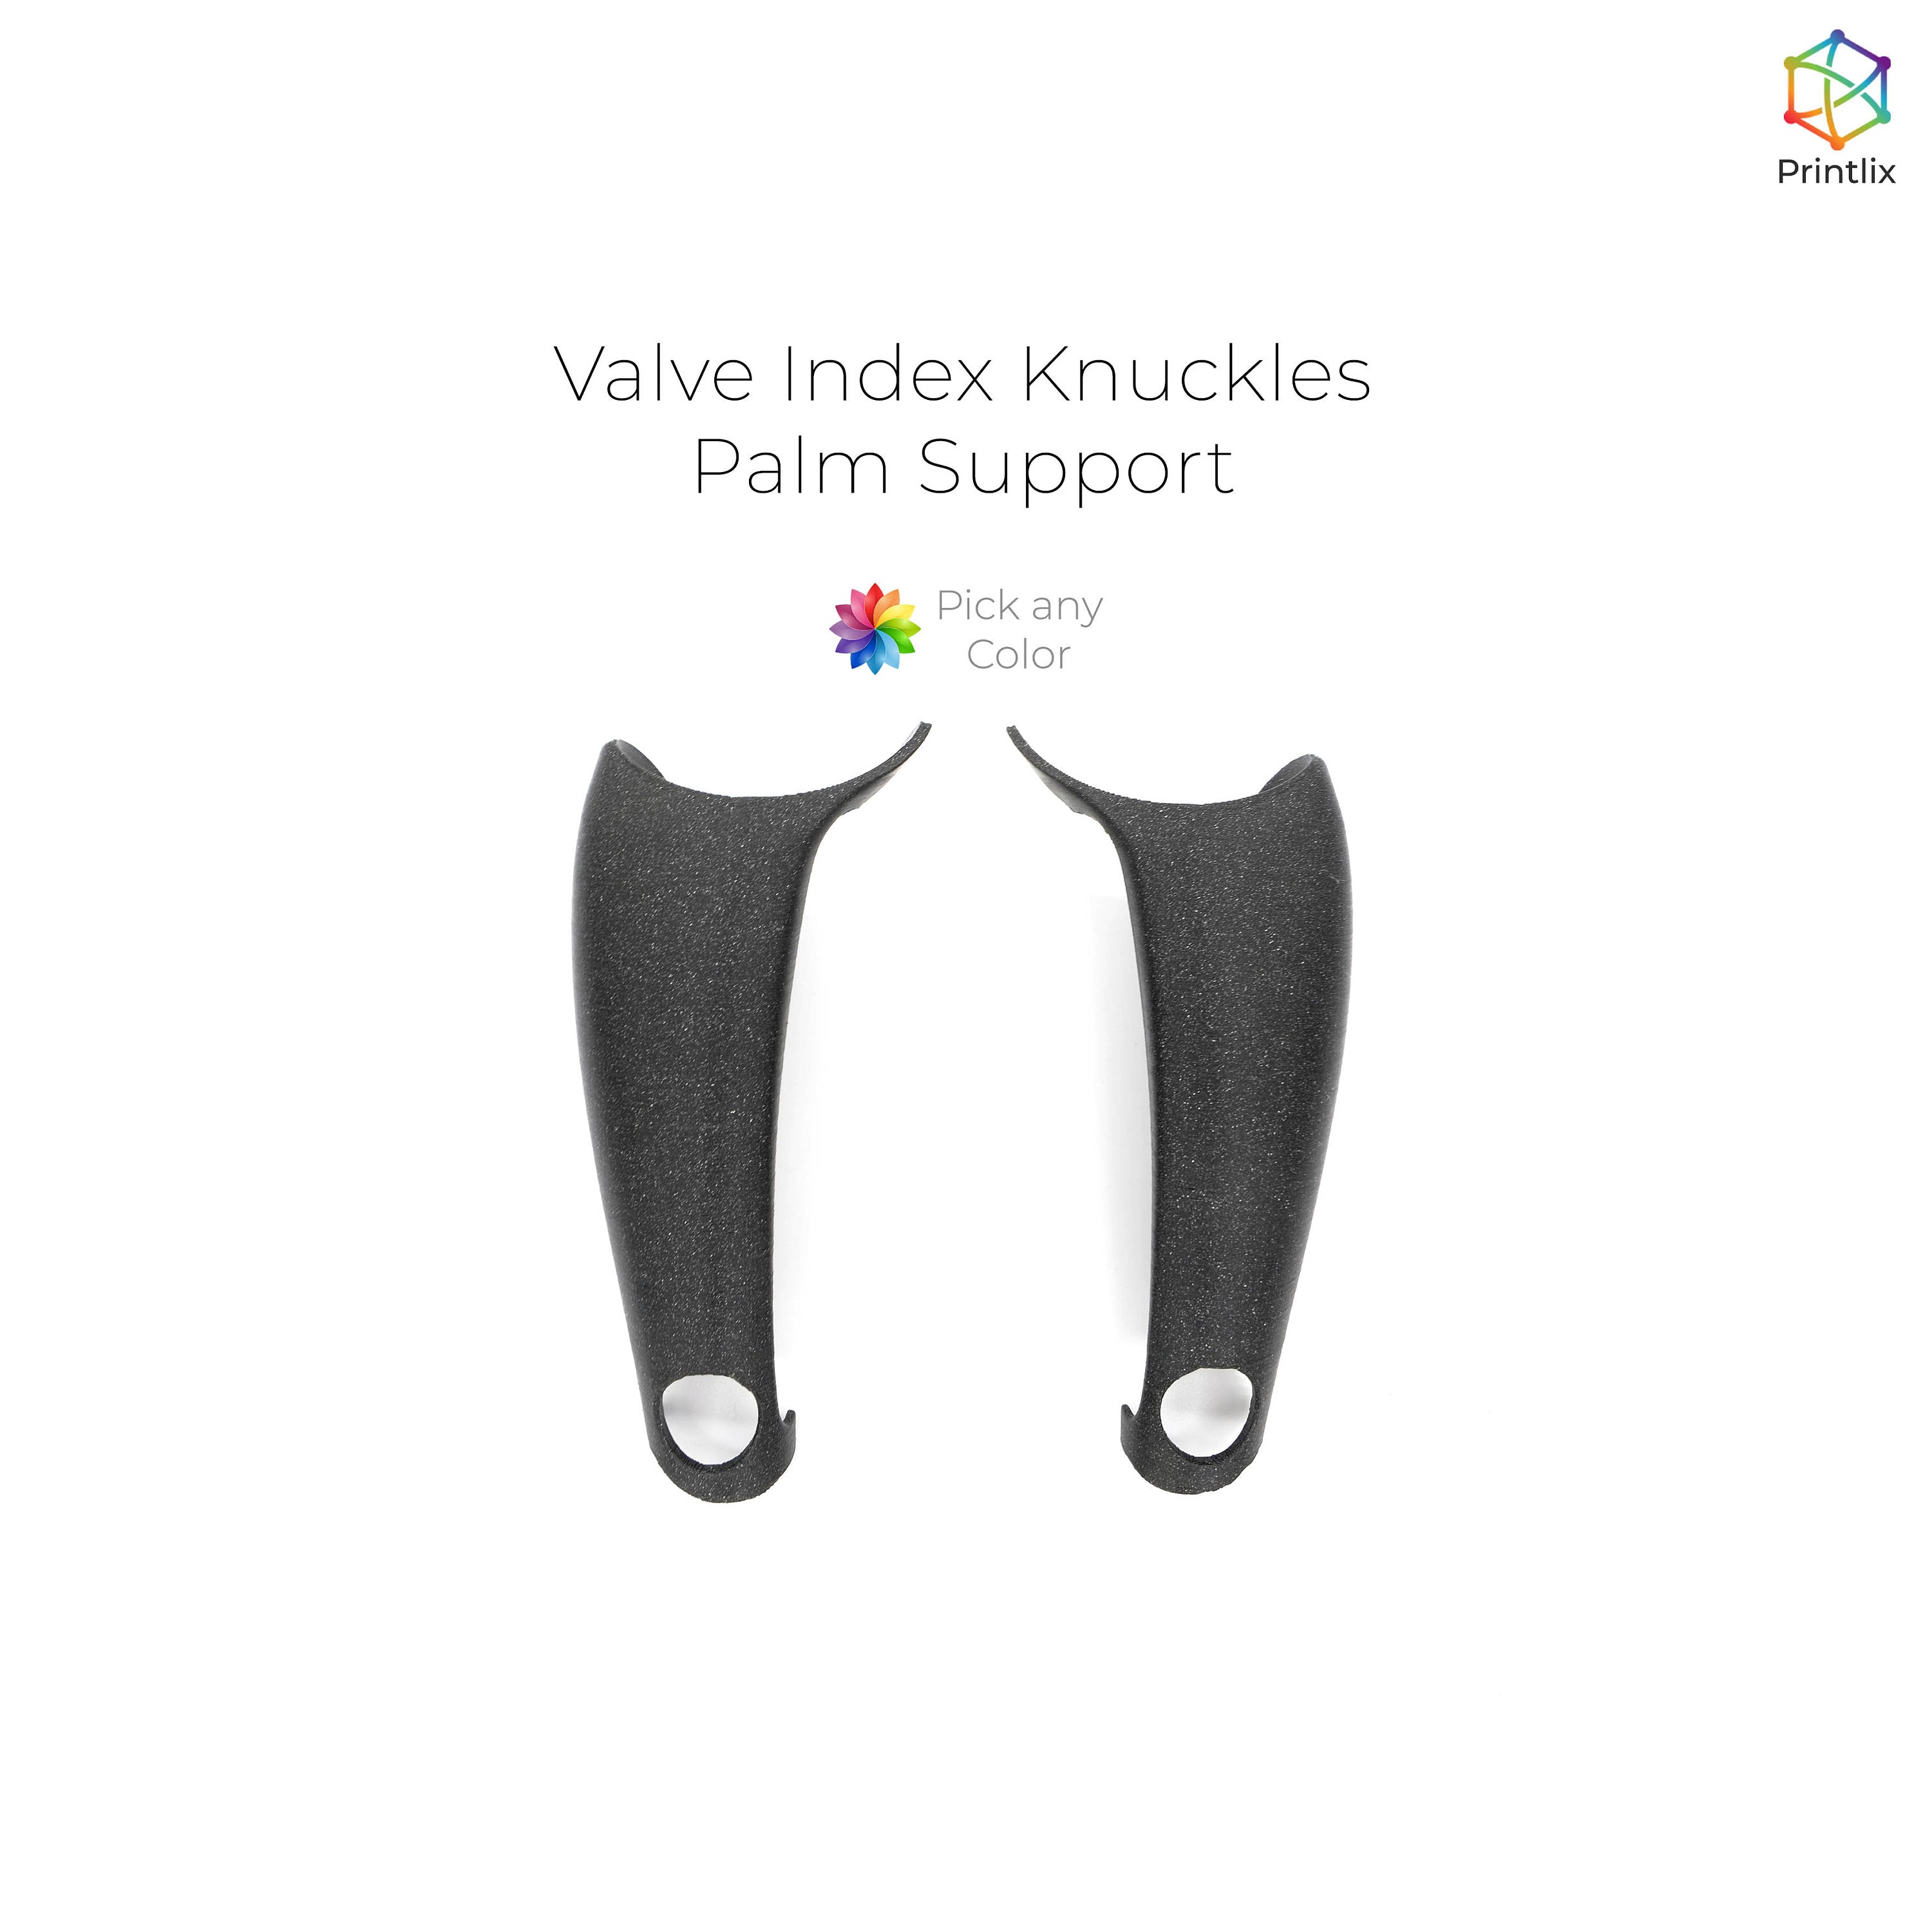 Valve Index Knuckles 2x Set Palm Support - PLA 3D Printed